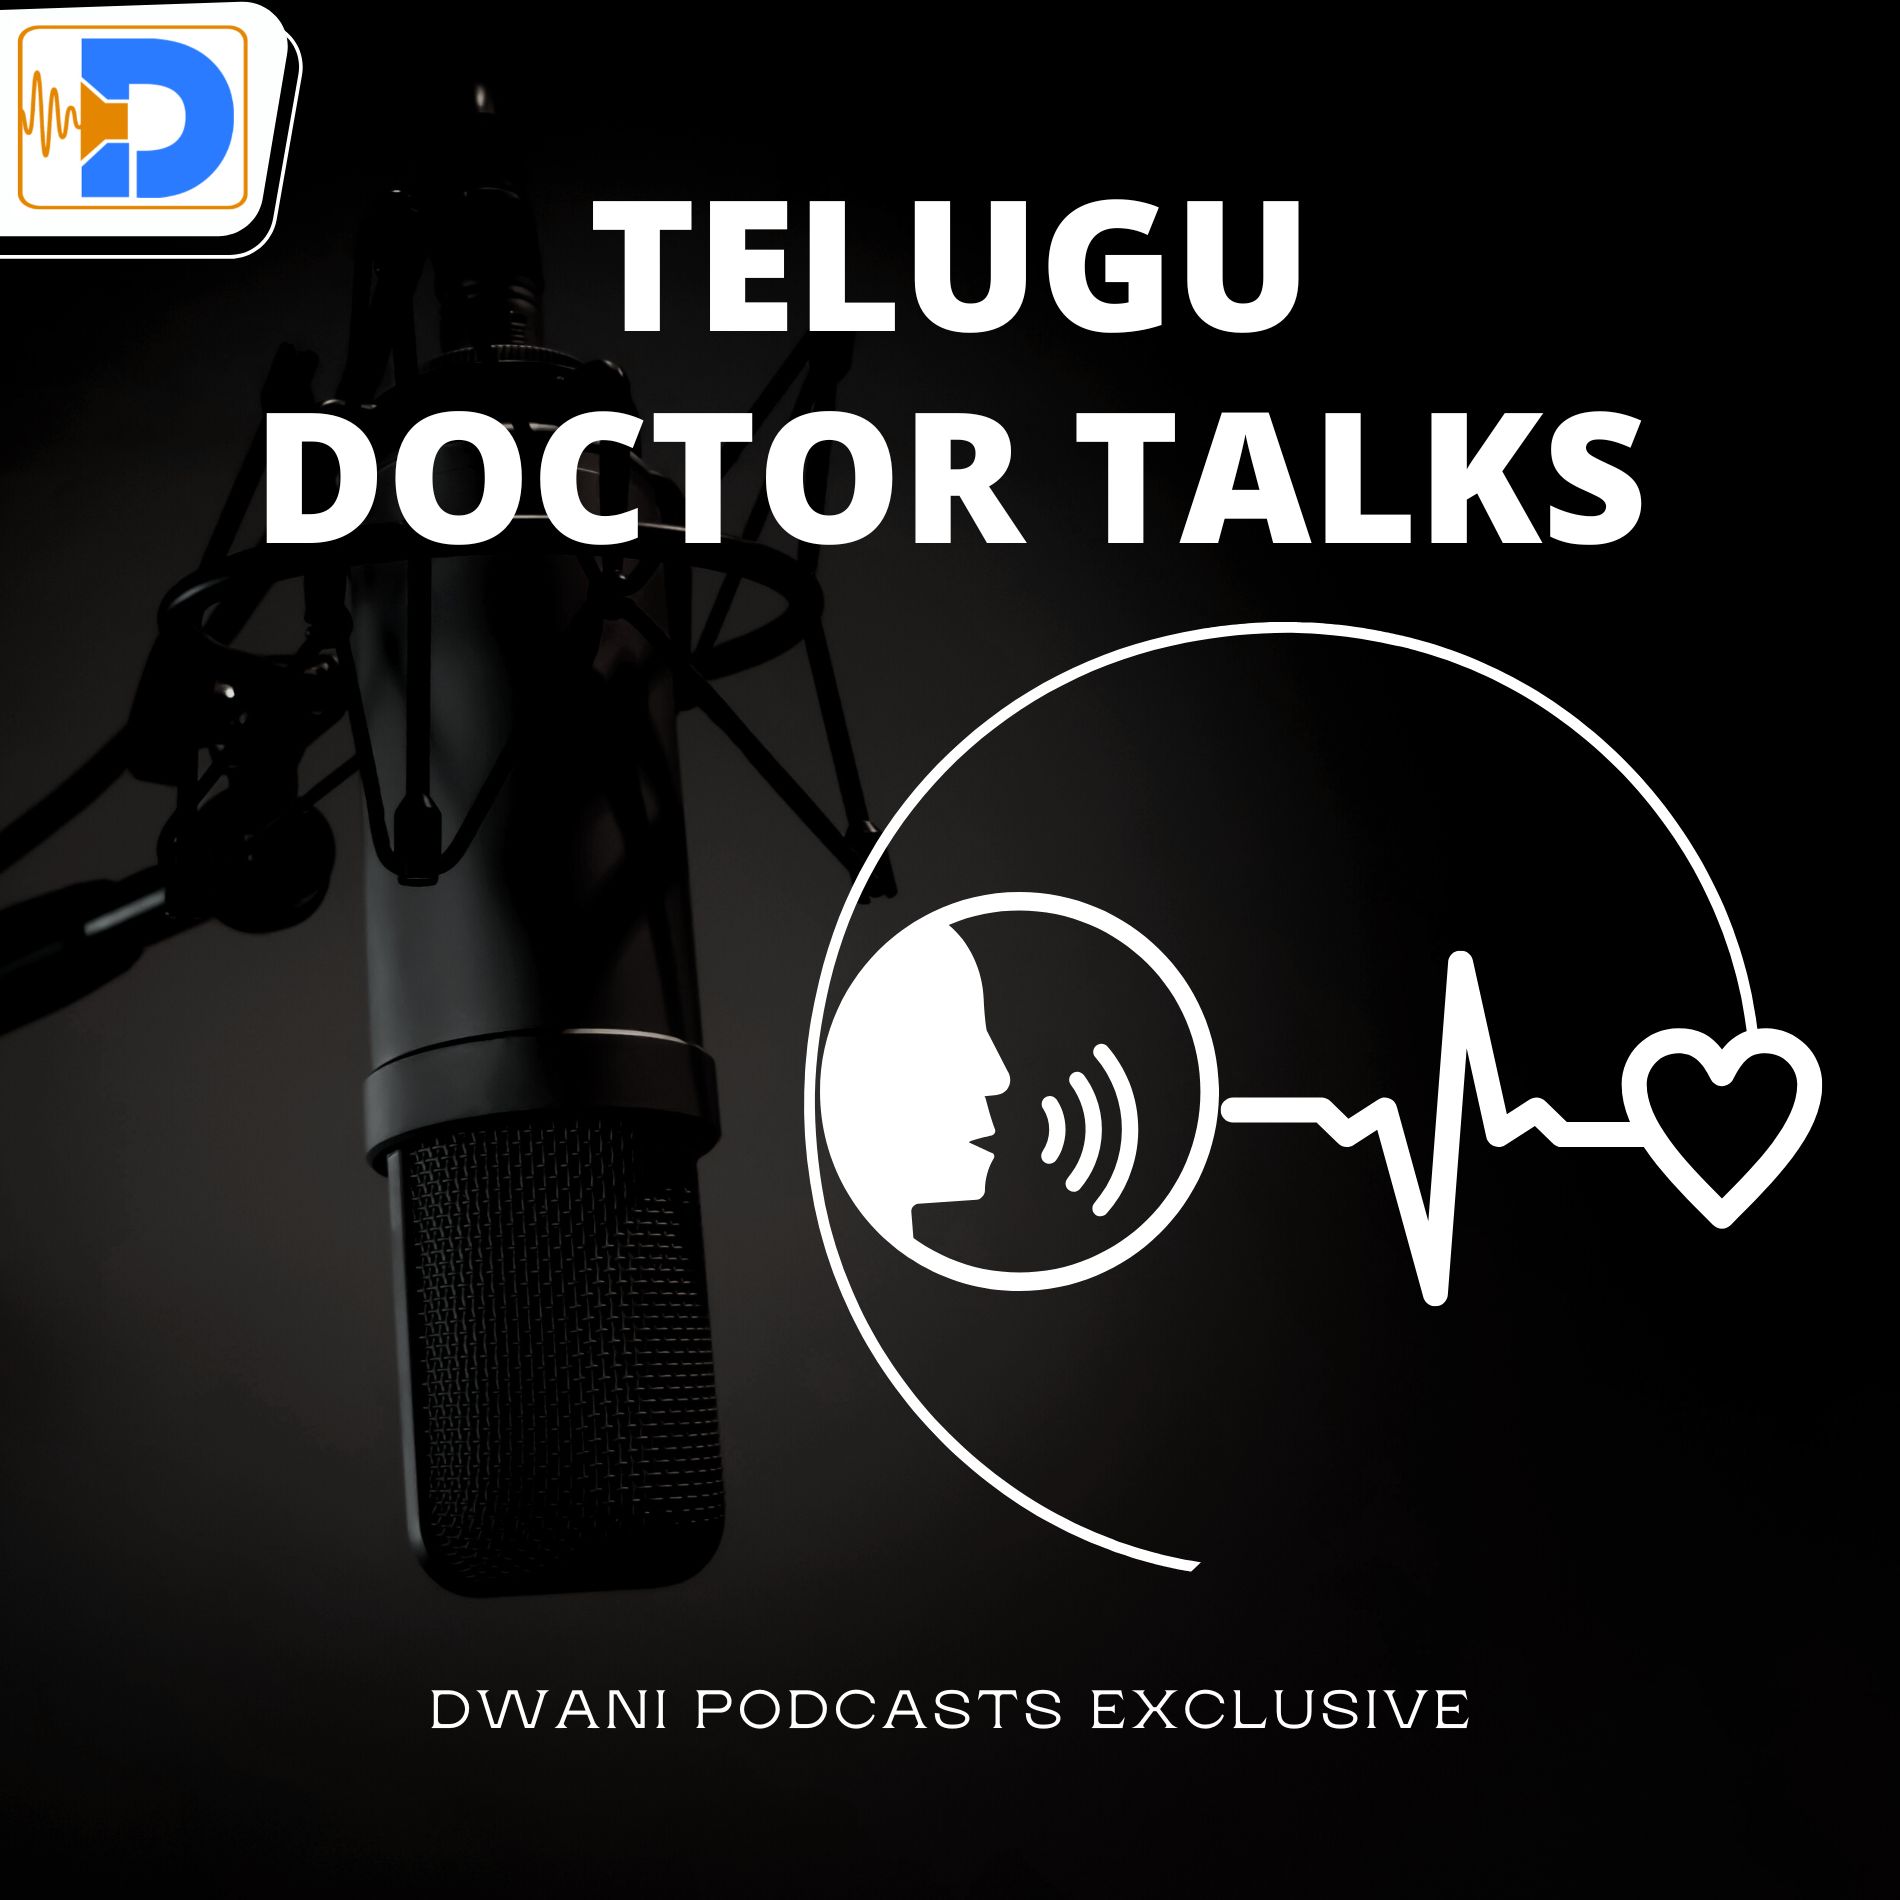 Artwork for Telugu Doctor Talks